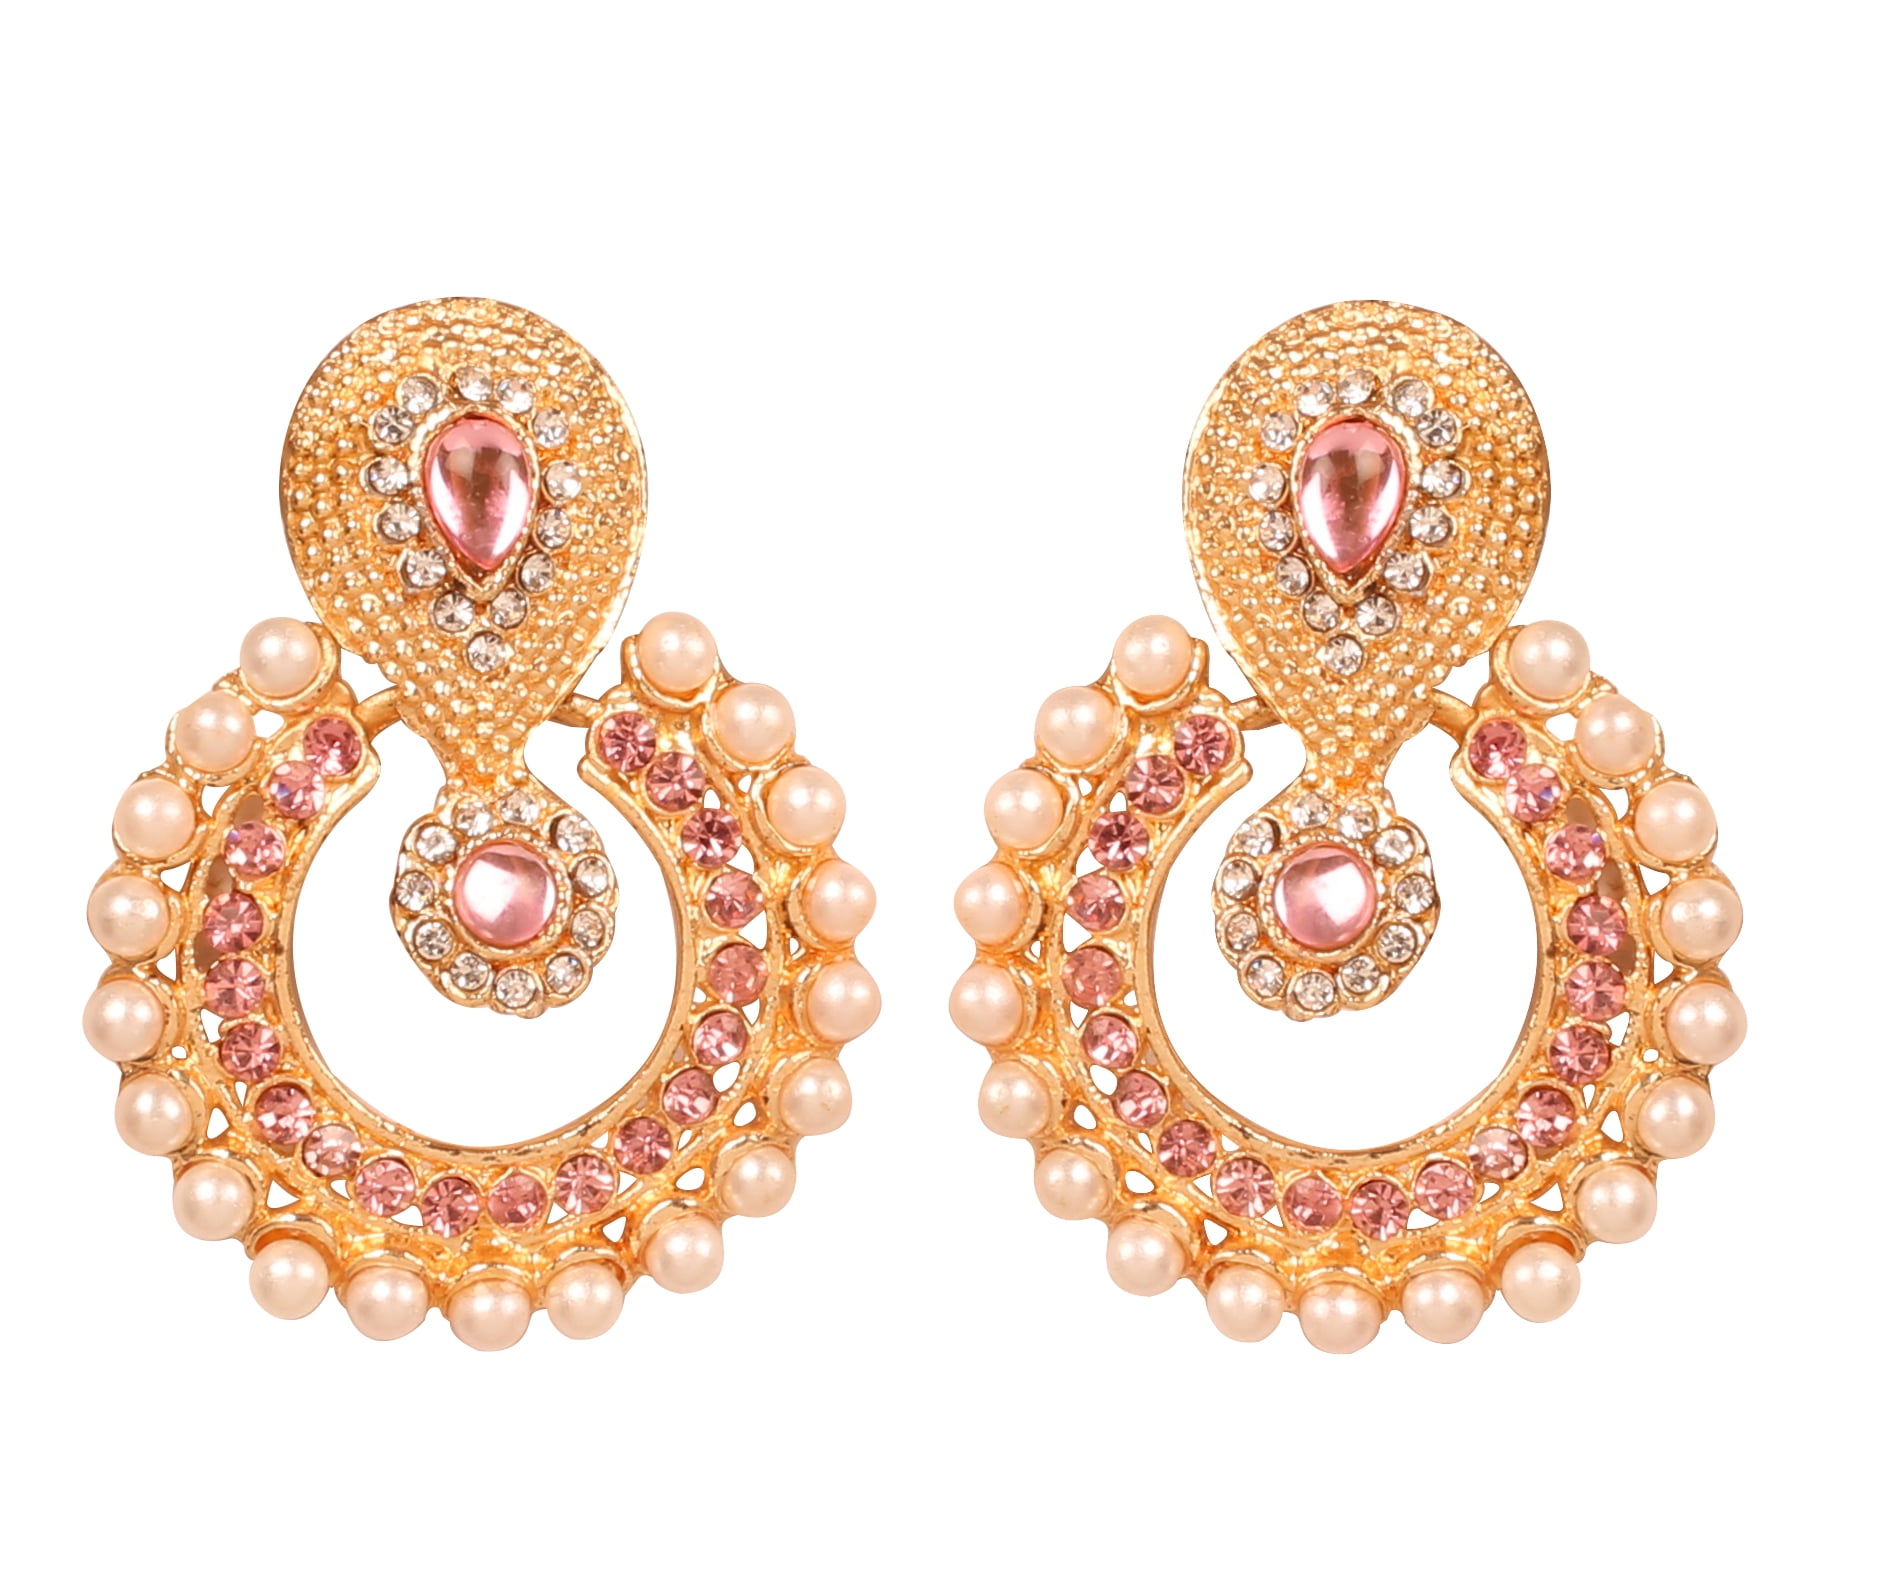 Touchstone Indian Bollywood Bridal Designer Jewelry Chandelier Earrings Chandbali for Women in Gold Tone 